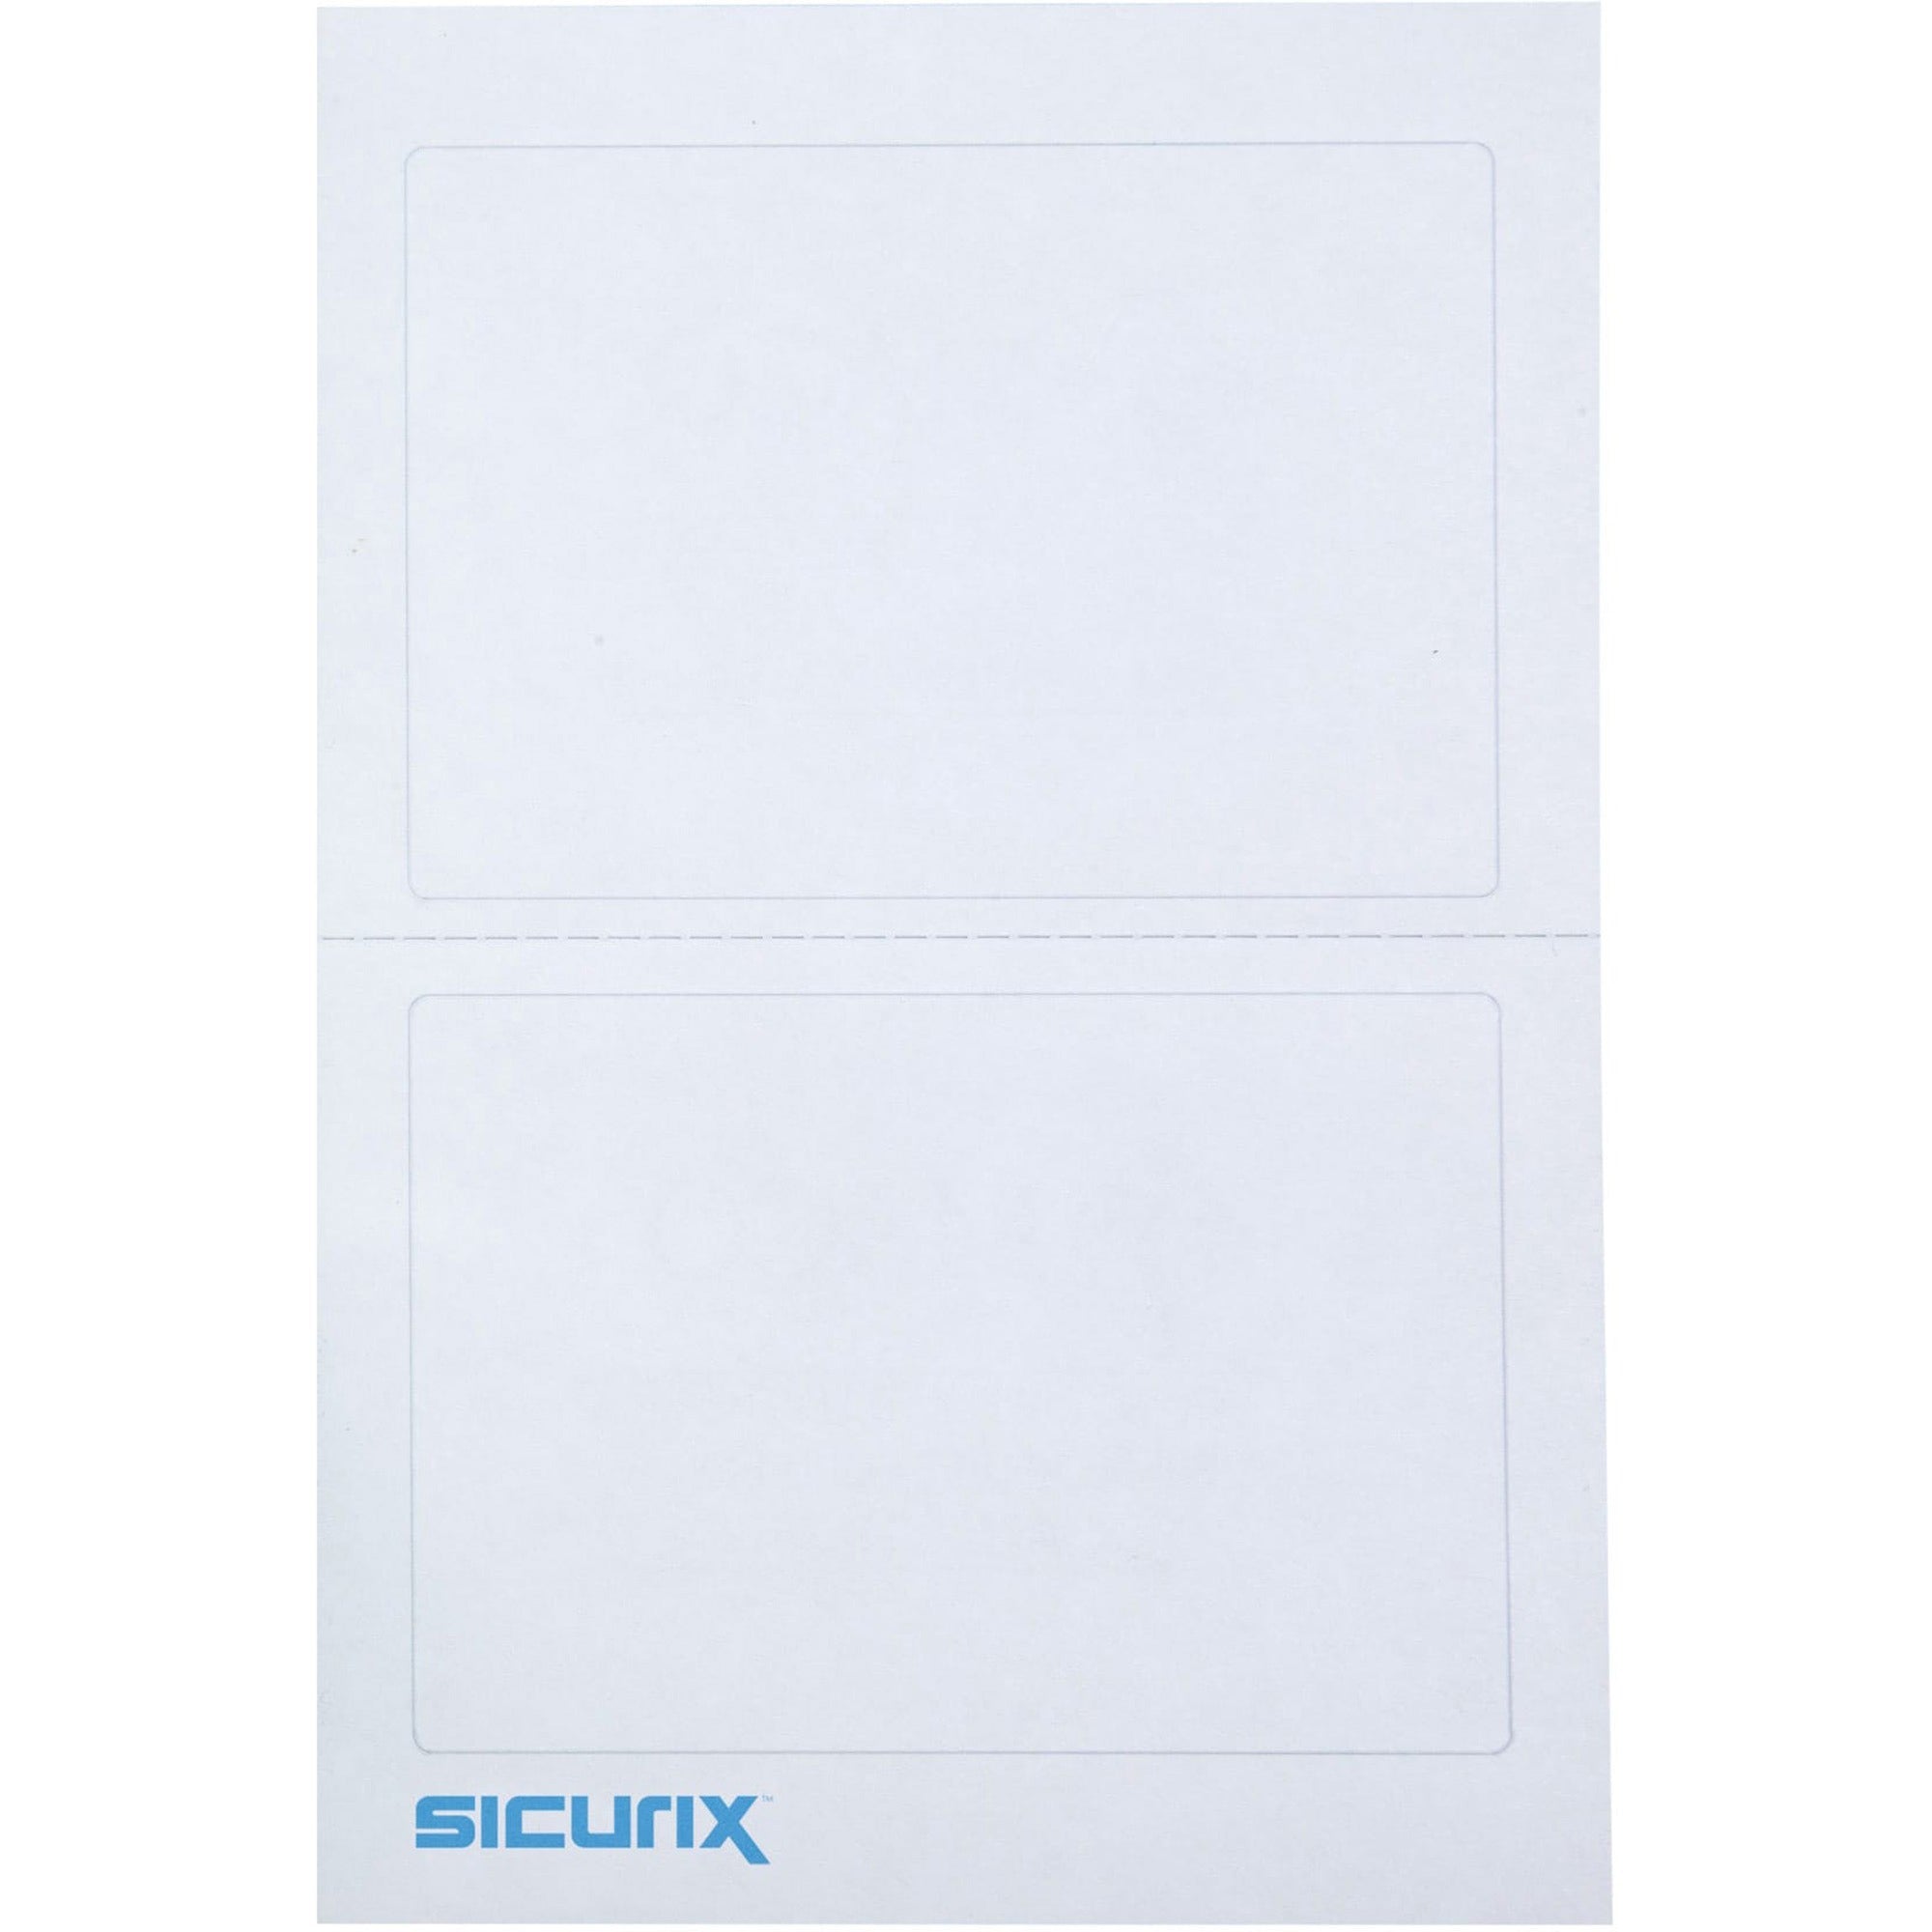 SICURIX Self-adhesive Visitor Badge - 3 1/2" Width x 2 1/4" Length - Removable Adhesive - Rectangle - Plain White - 100 / Box - Self-adhesive, Easy Peel - 